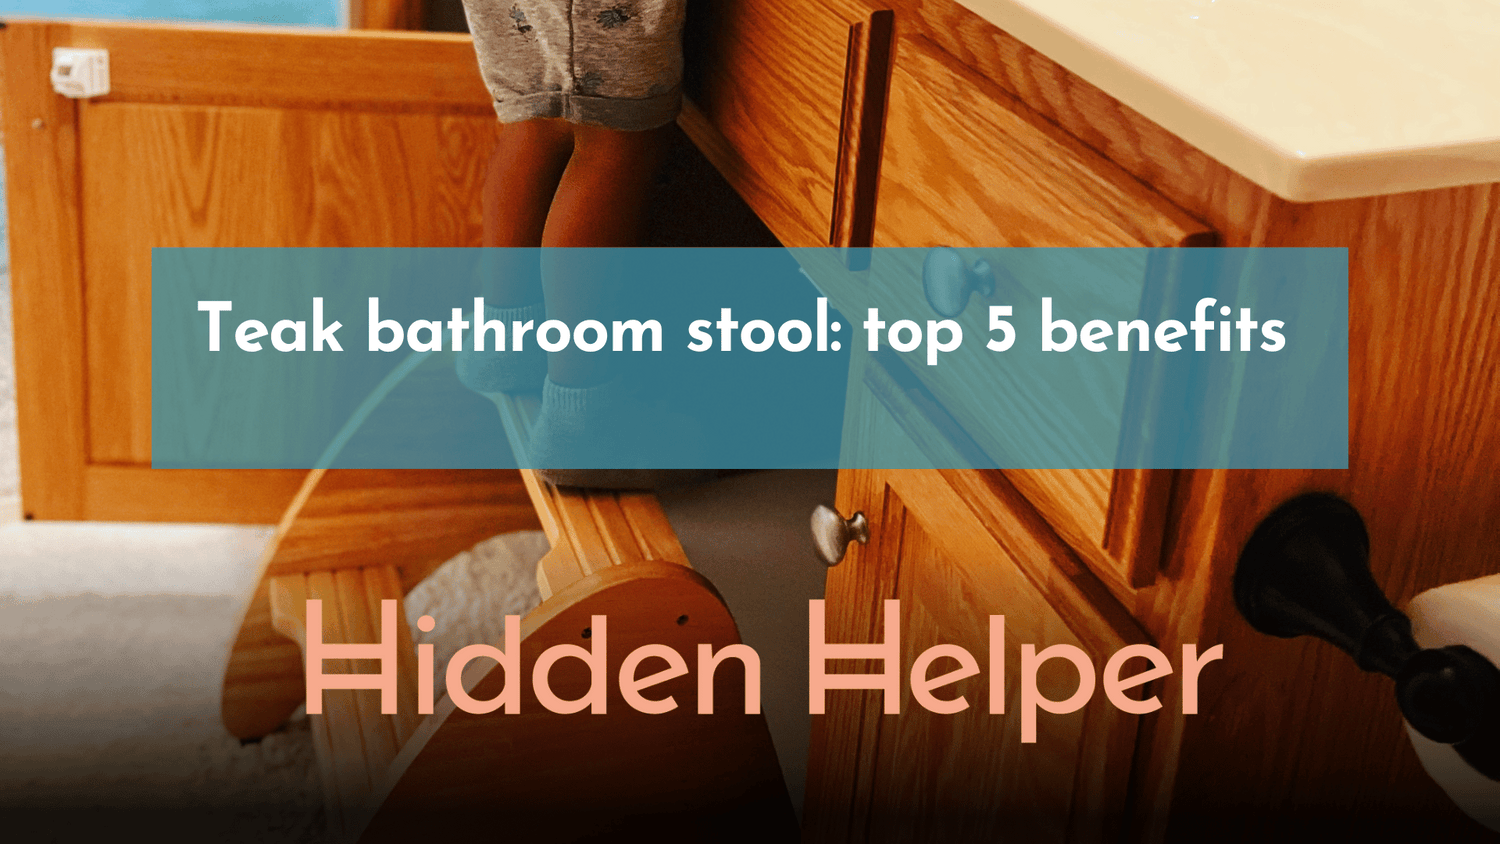 Teak bathroom stool: top 5 benefits